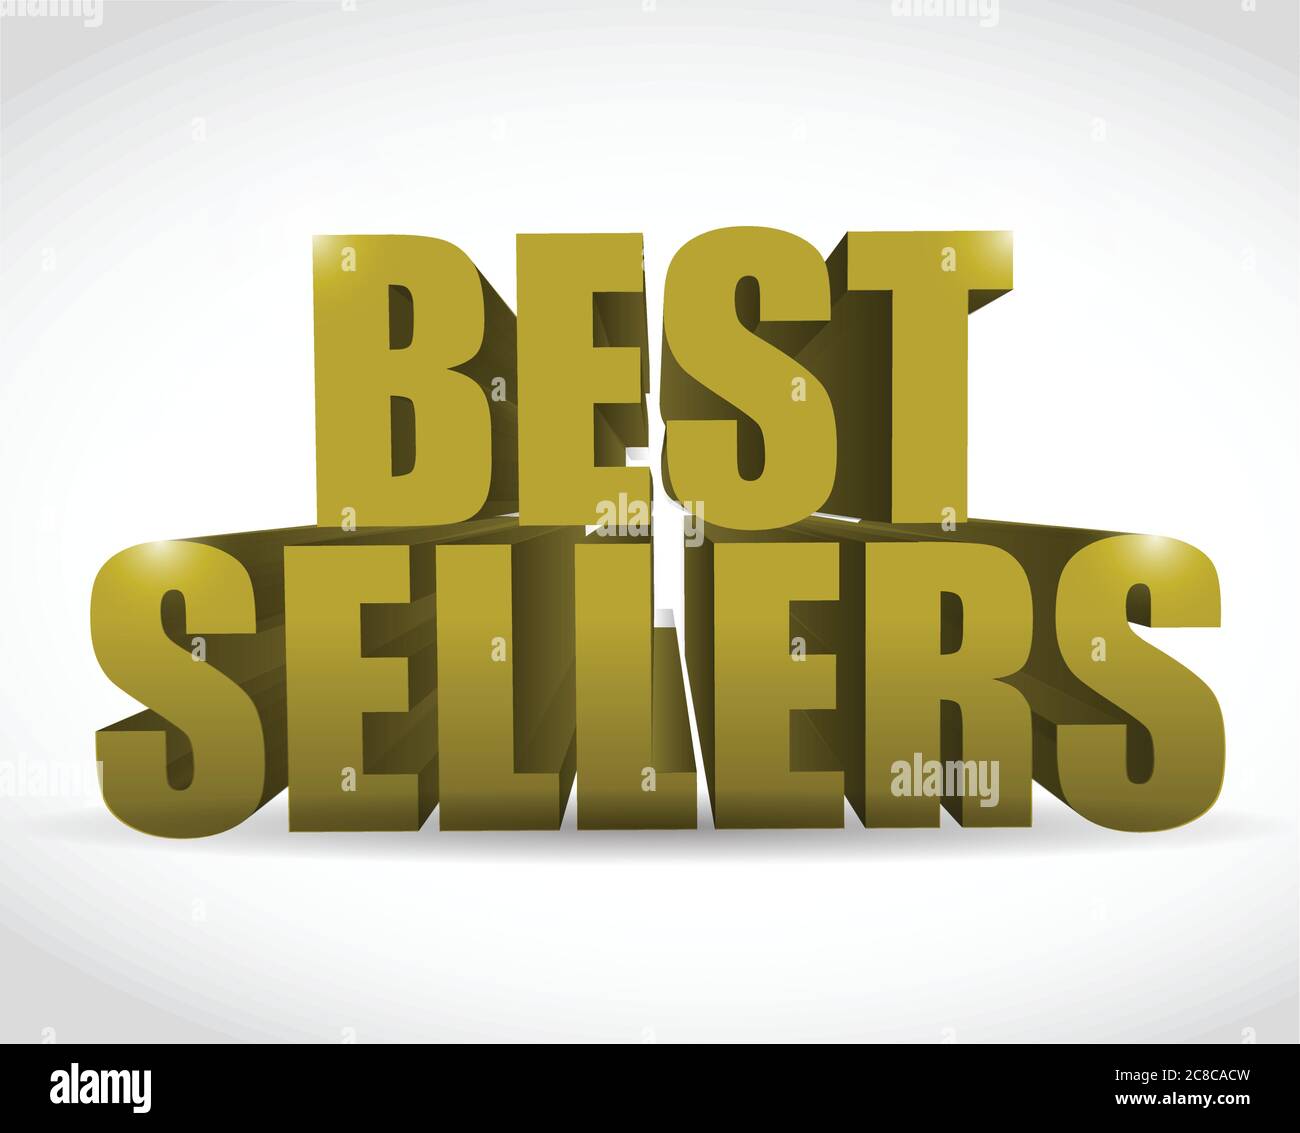 Best seller gold sign illustration design over a white background Stock Vector